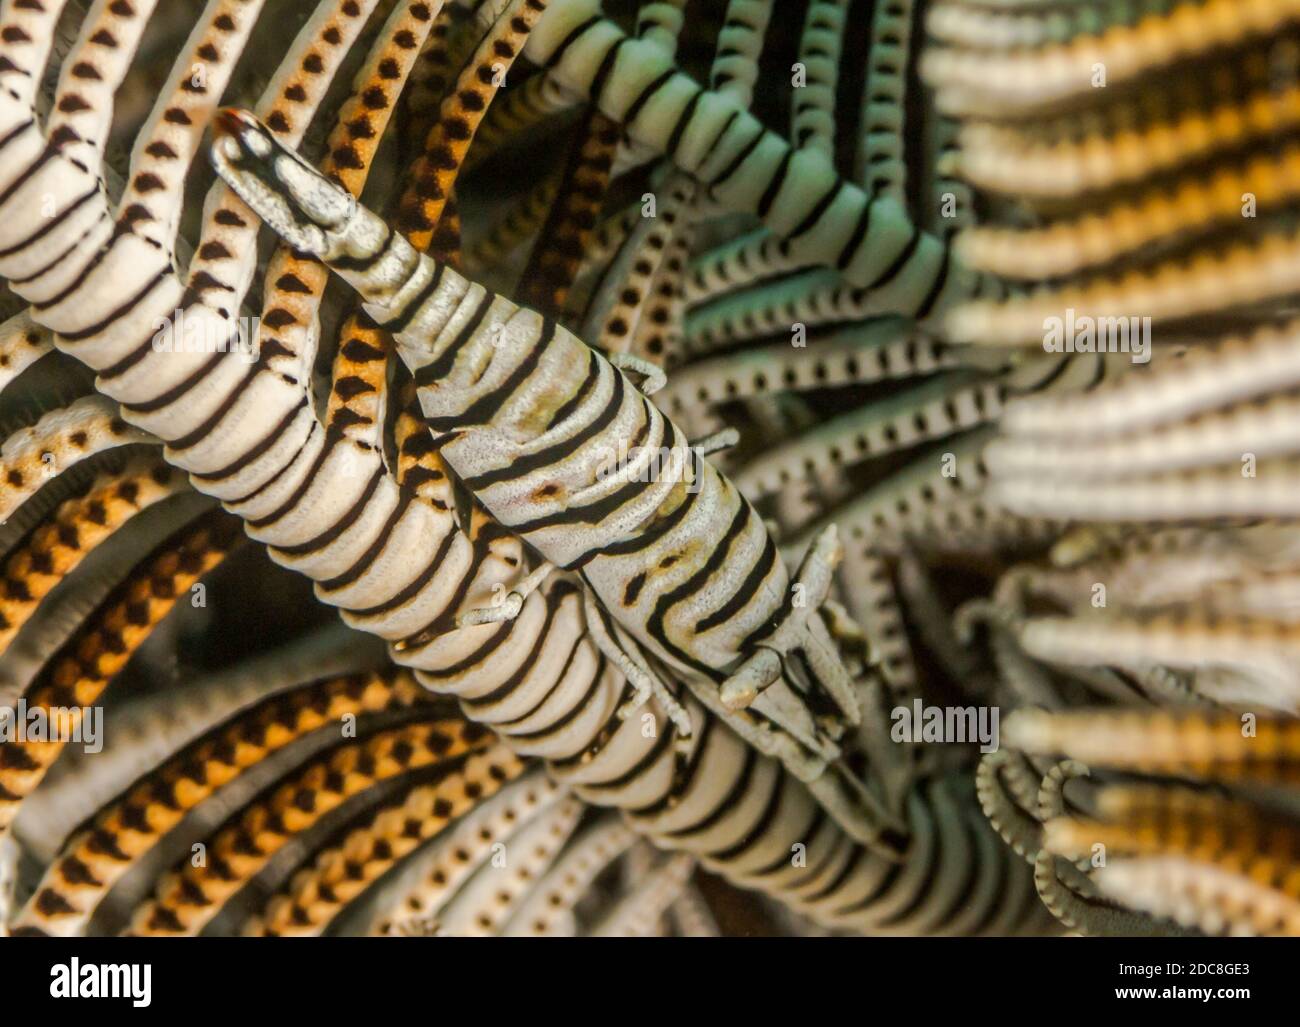 zebra shrimp hiding in feather star coral in sea Stock Photo